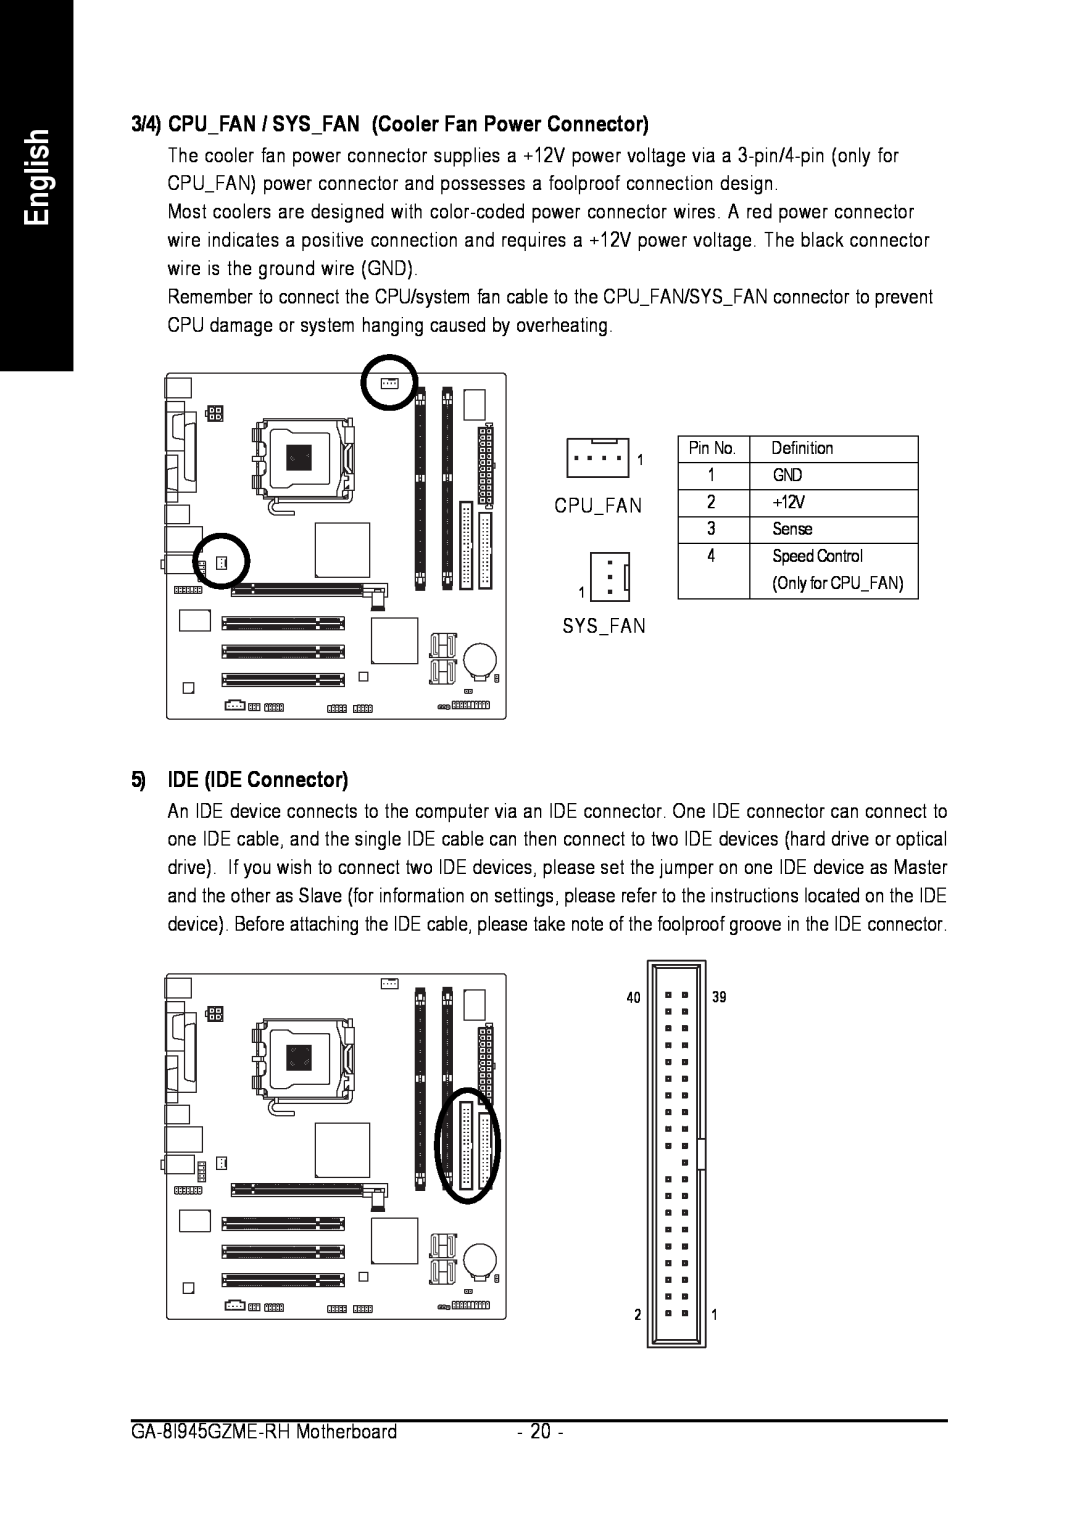 Intel GA-8I945GZME-RH user manual 3/4 CPUFAN / SYSFAN Cooler Fan Power Connector, IDE IDE Connector, English 